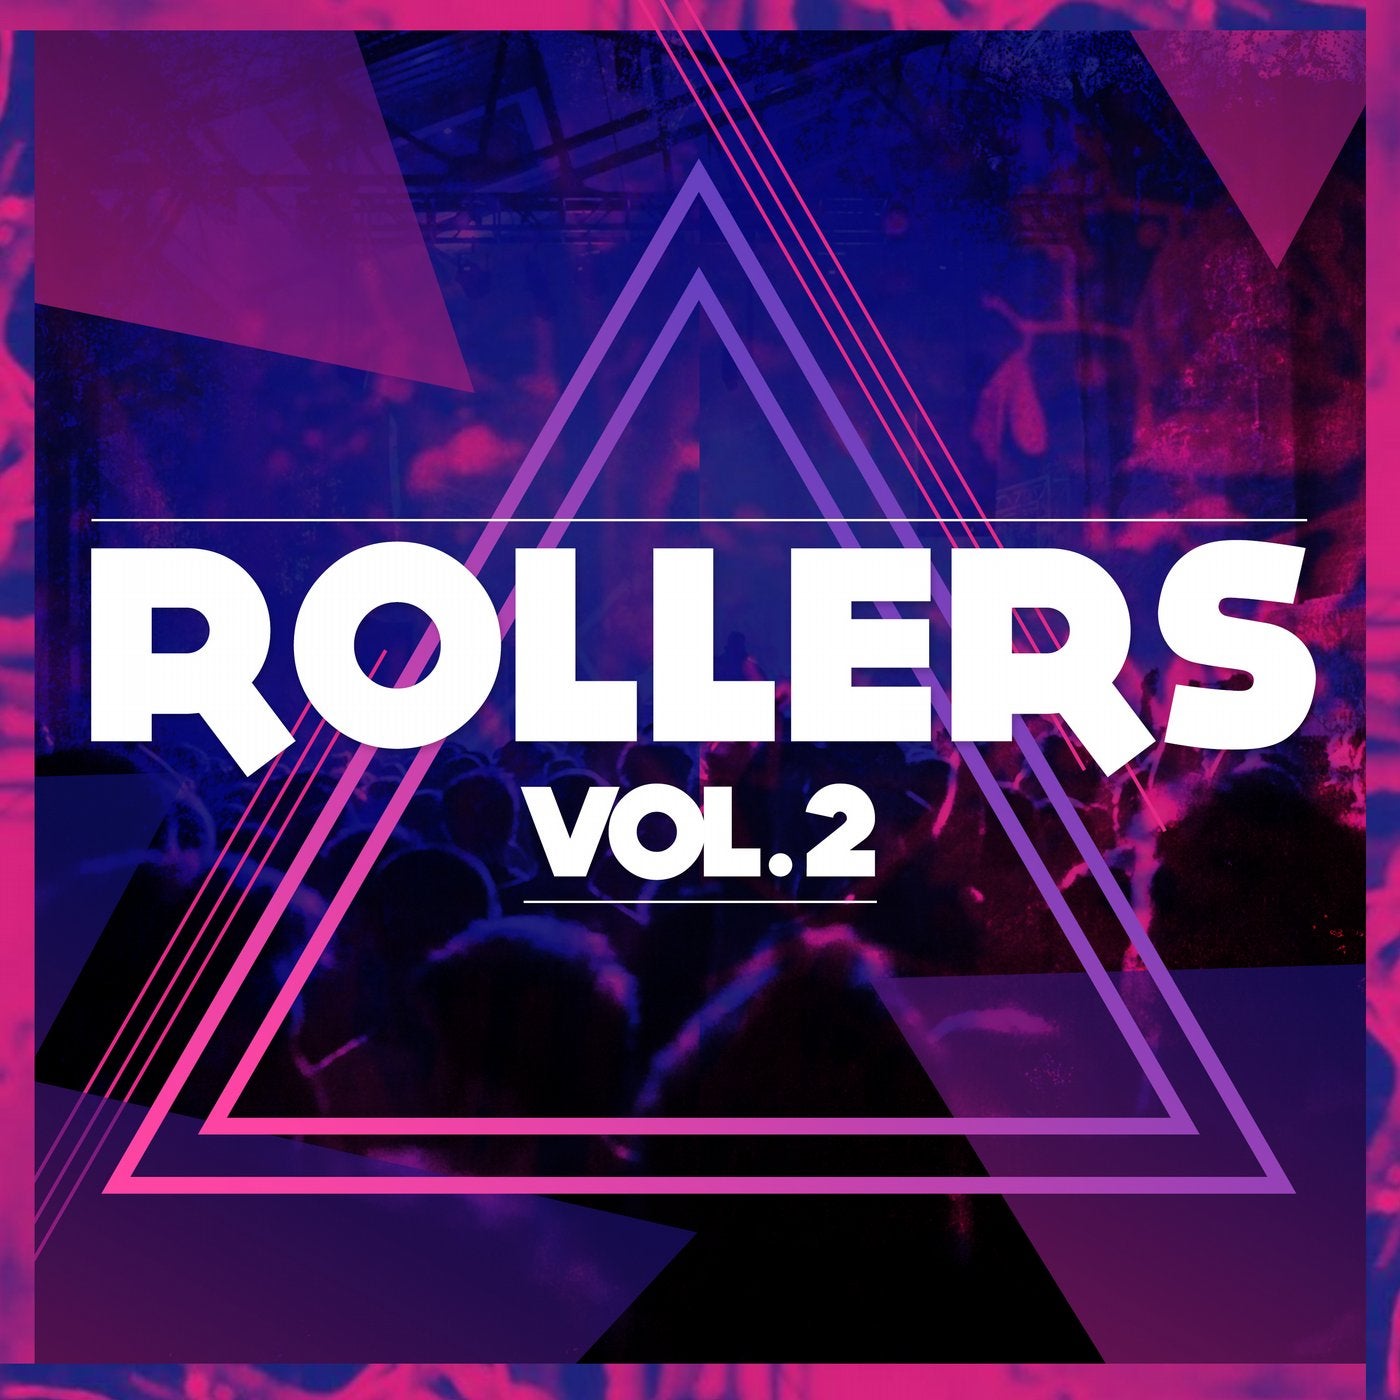 Rollers - Vol. 2